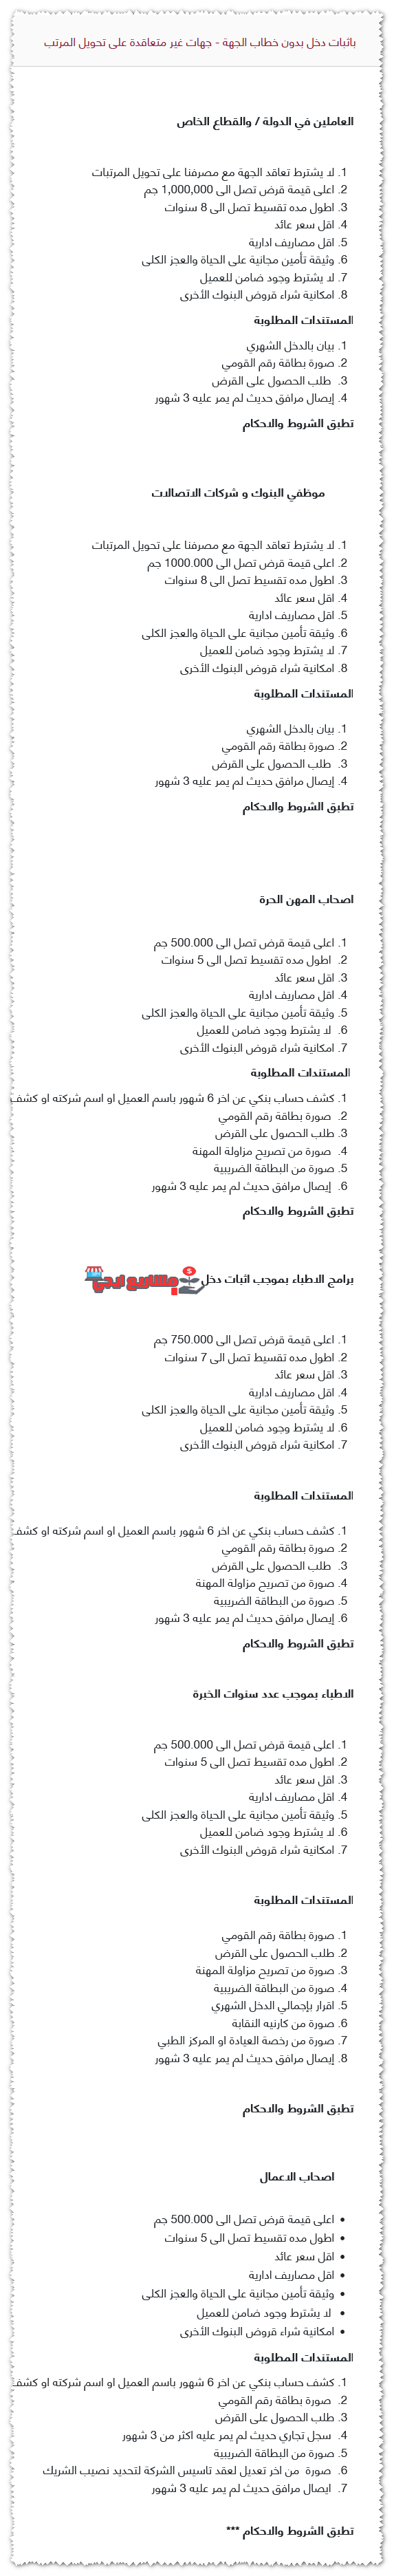 قرض شخصي من بنك مصر بدون تحويل راتب